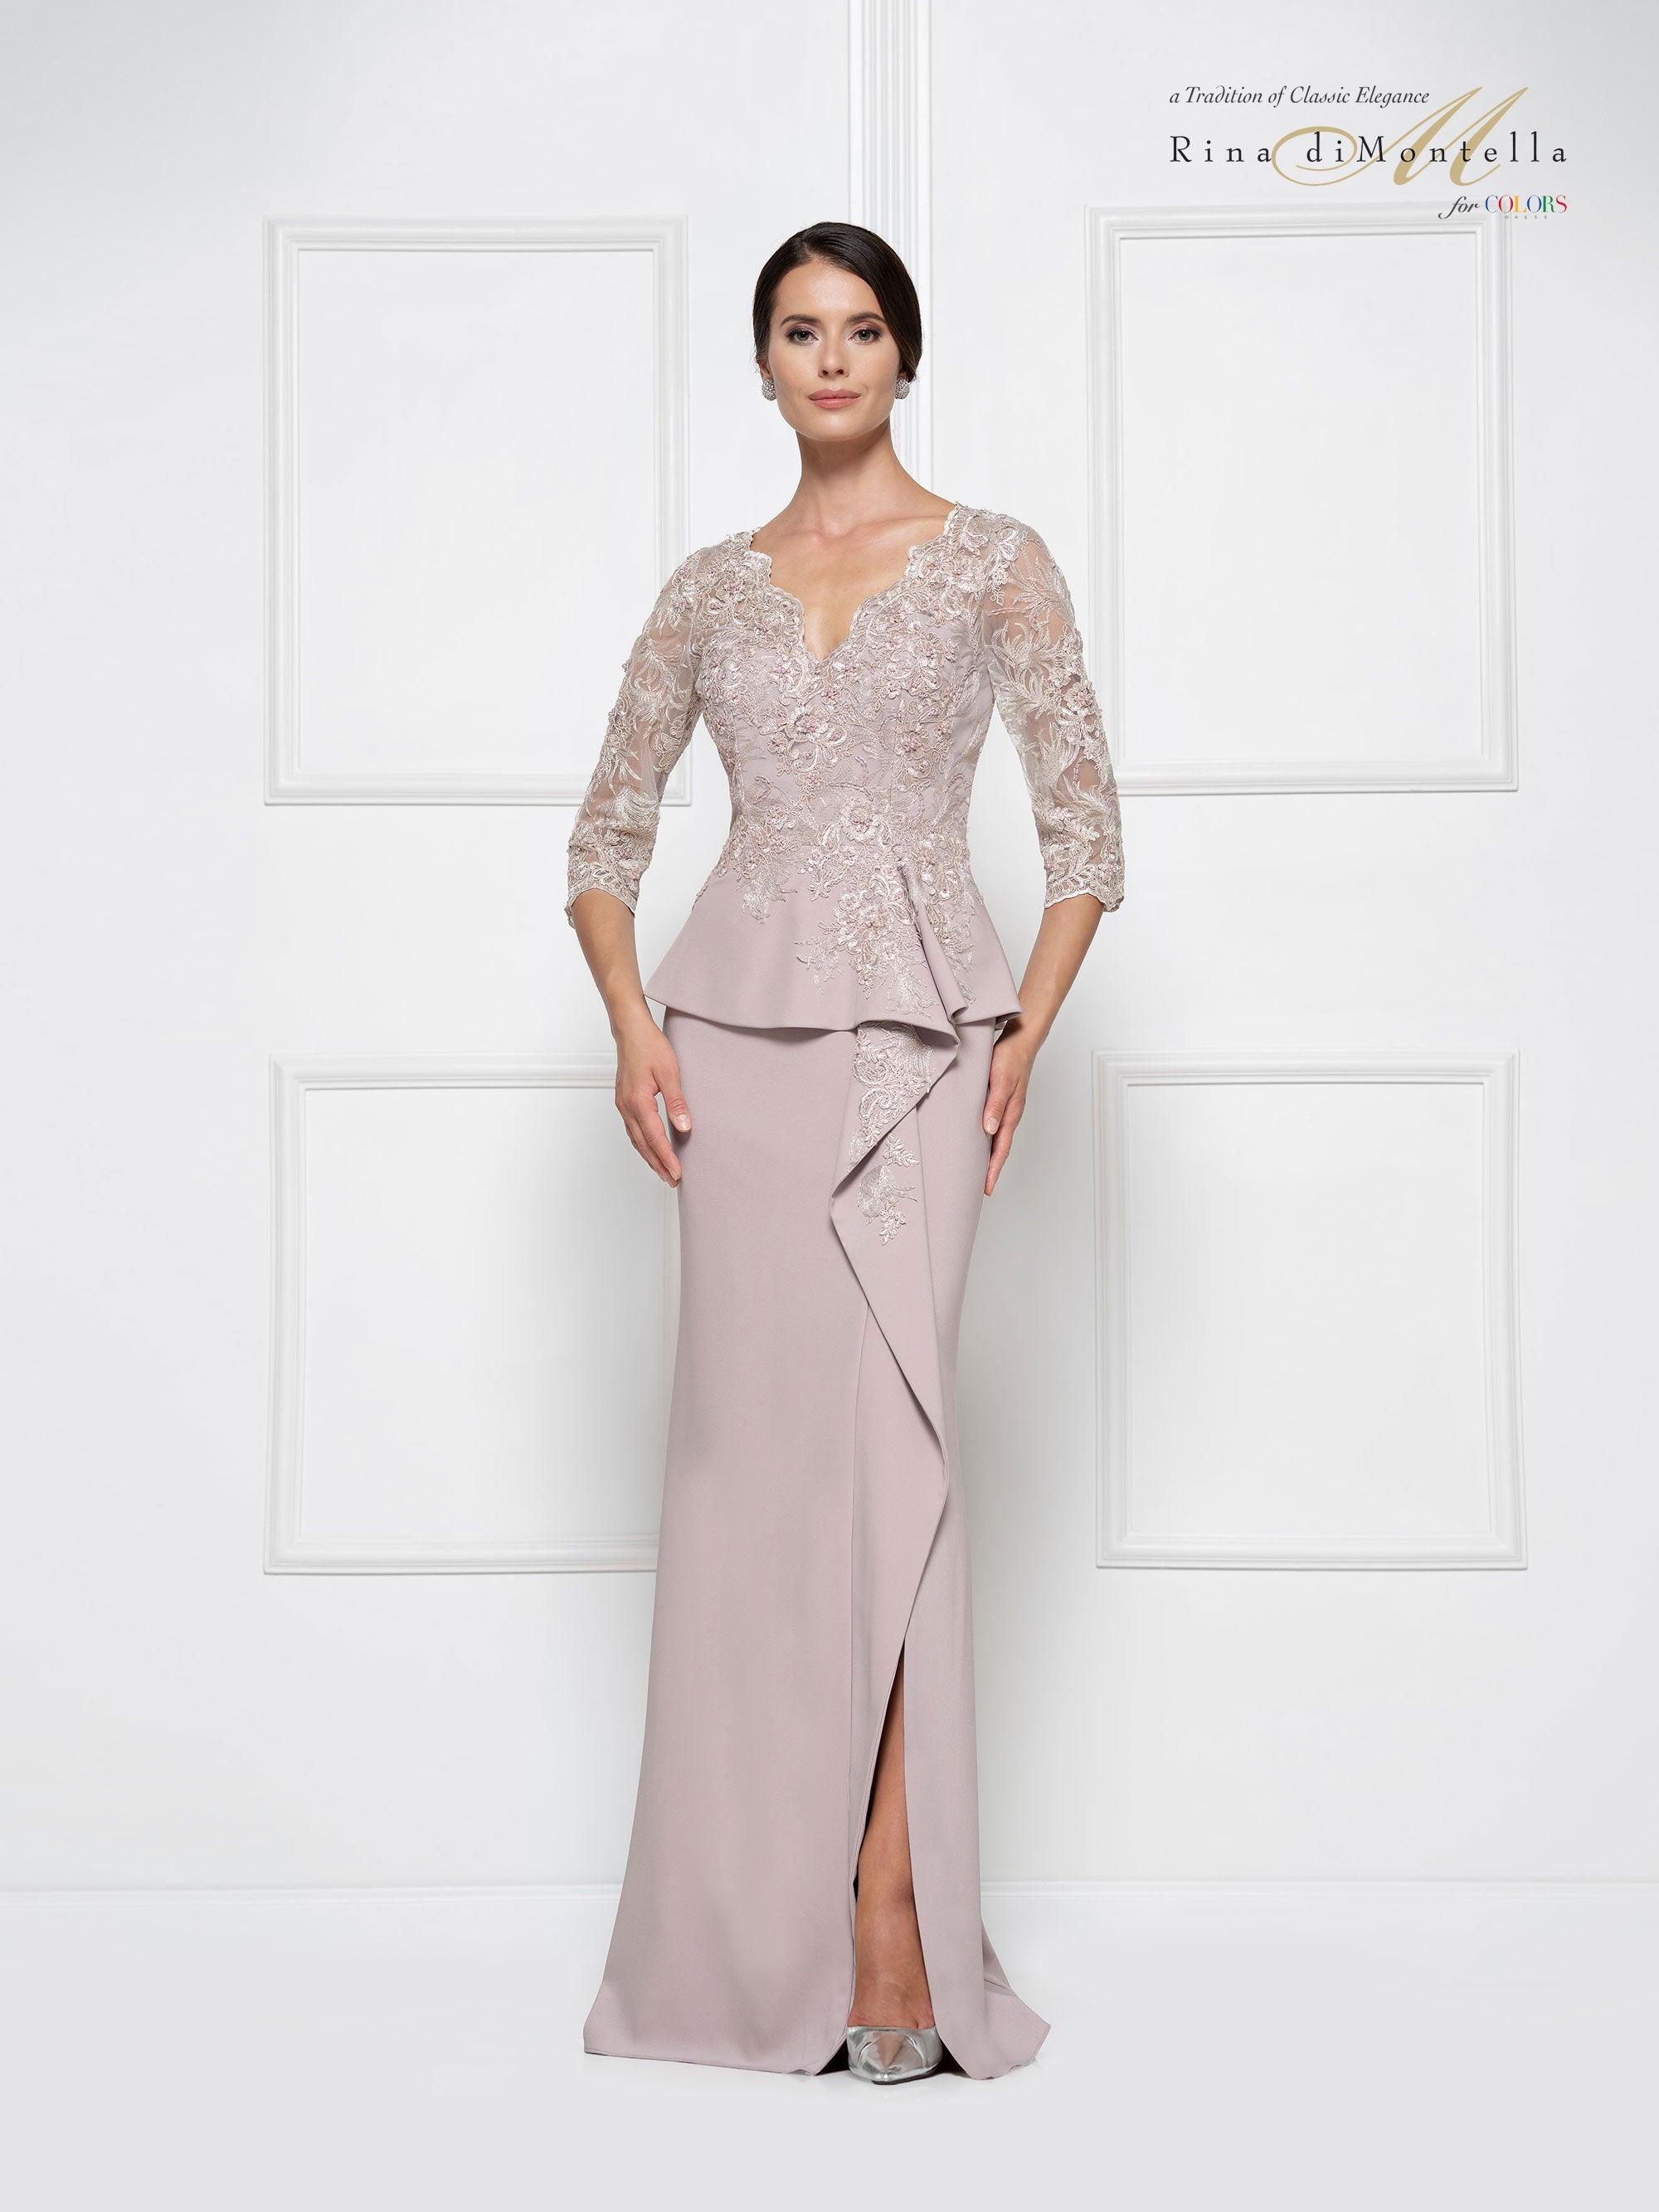 Rina di Montella Peplum Style Long Dress 2685 - The Dress Outlet